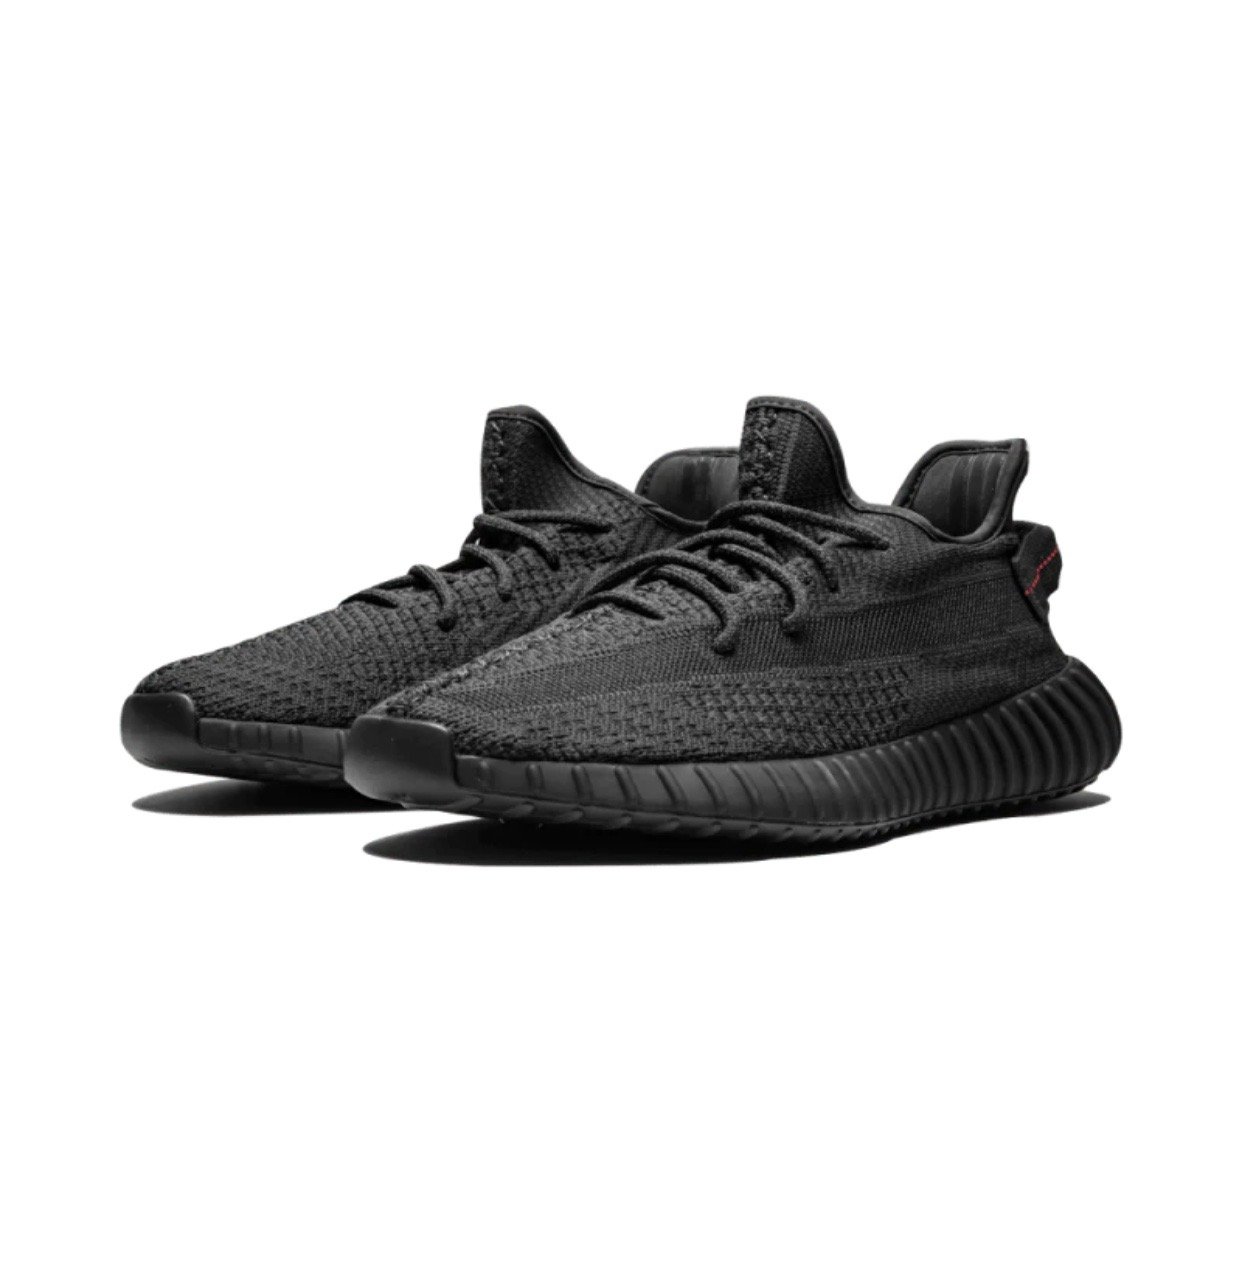 Image of Adidas Yeezy Boost 350 V2 Static Black